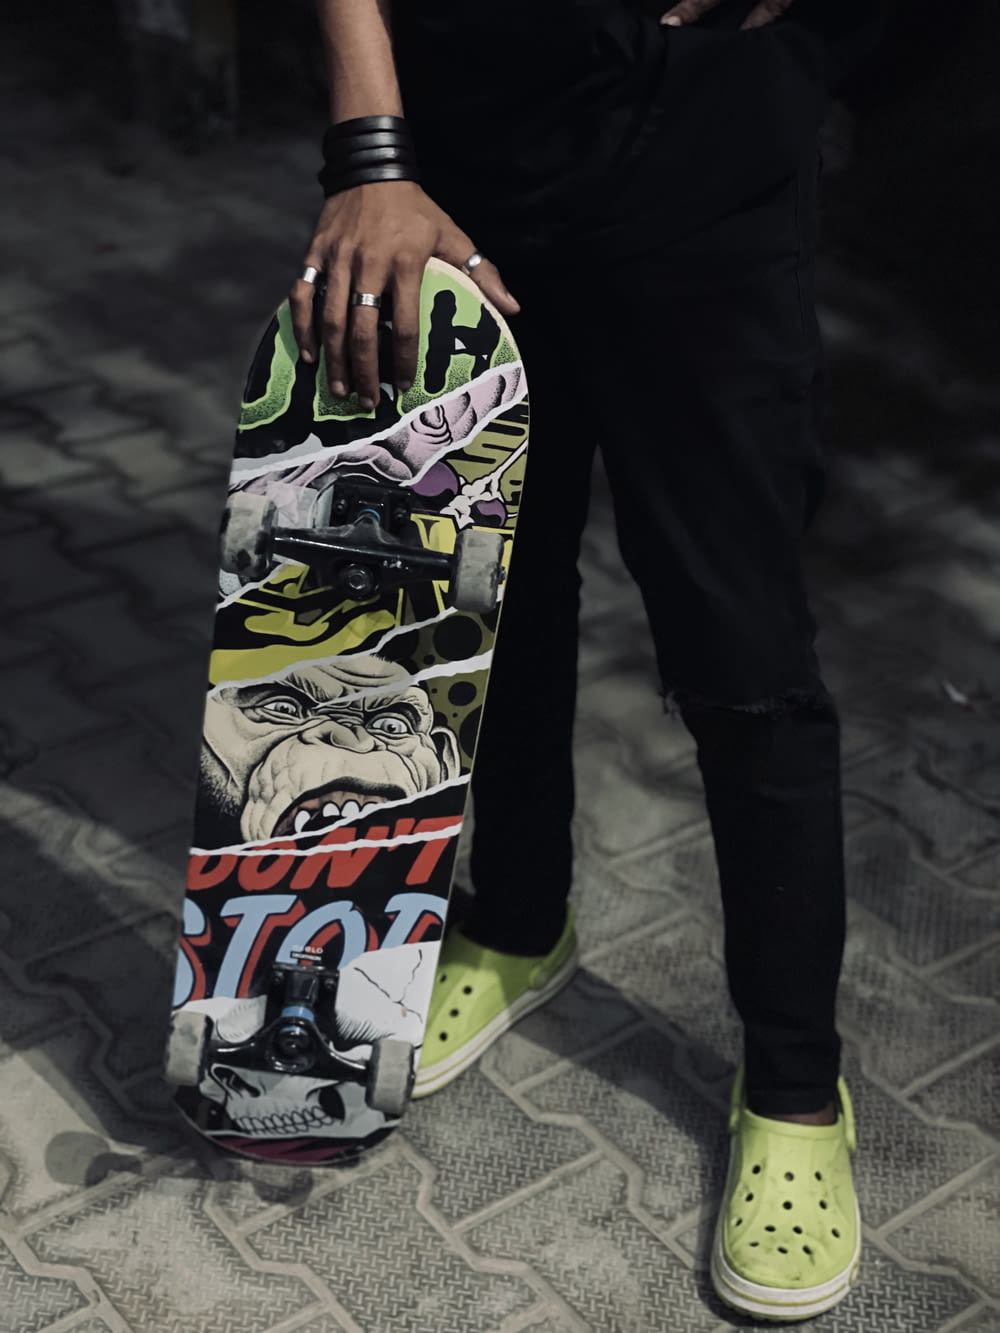 a person holding a skateboard on a sidewalk